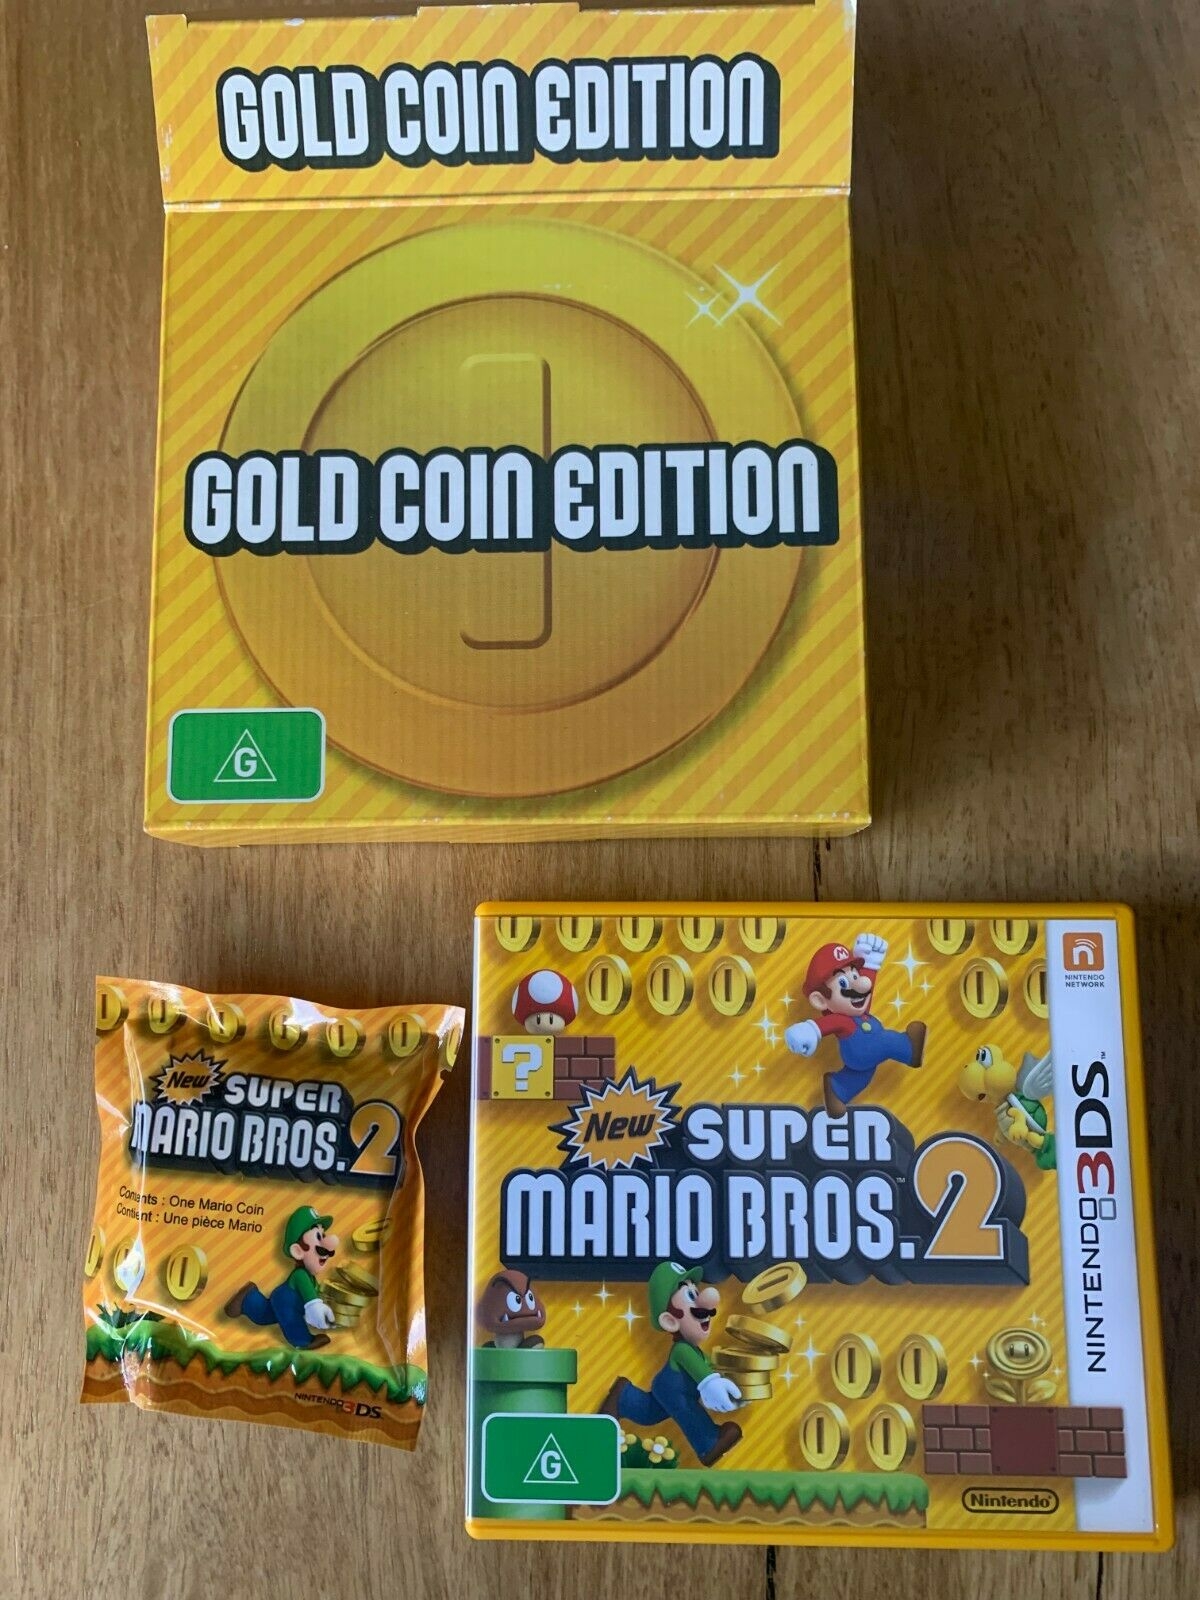 Edition] - - Browse TGDB Mario [Gold - Game New Coin Bros. Super 2